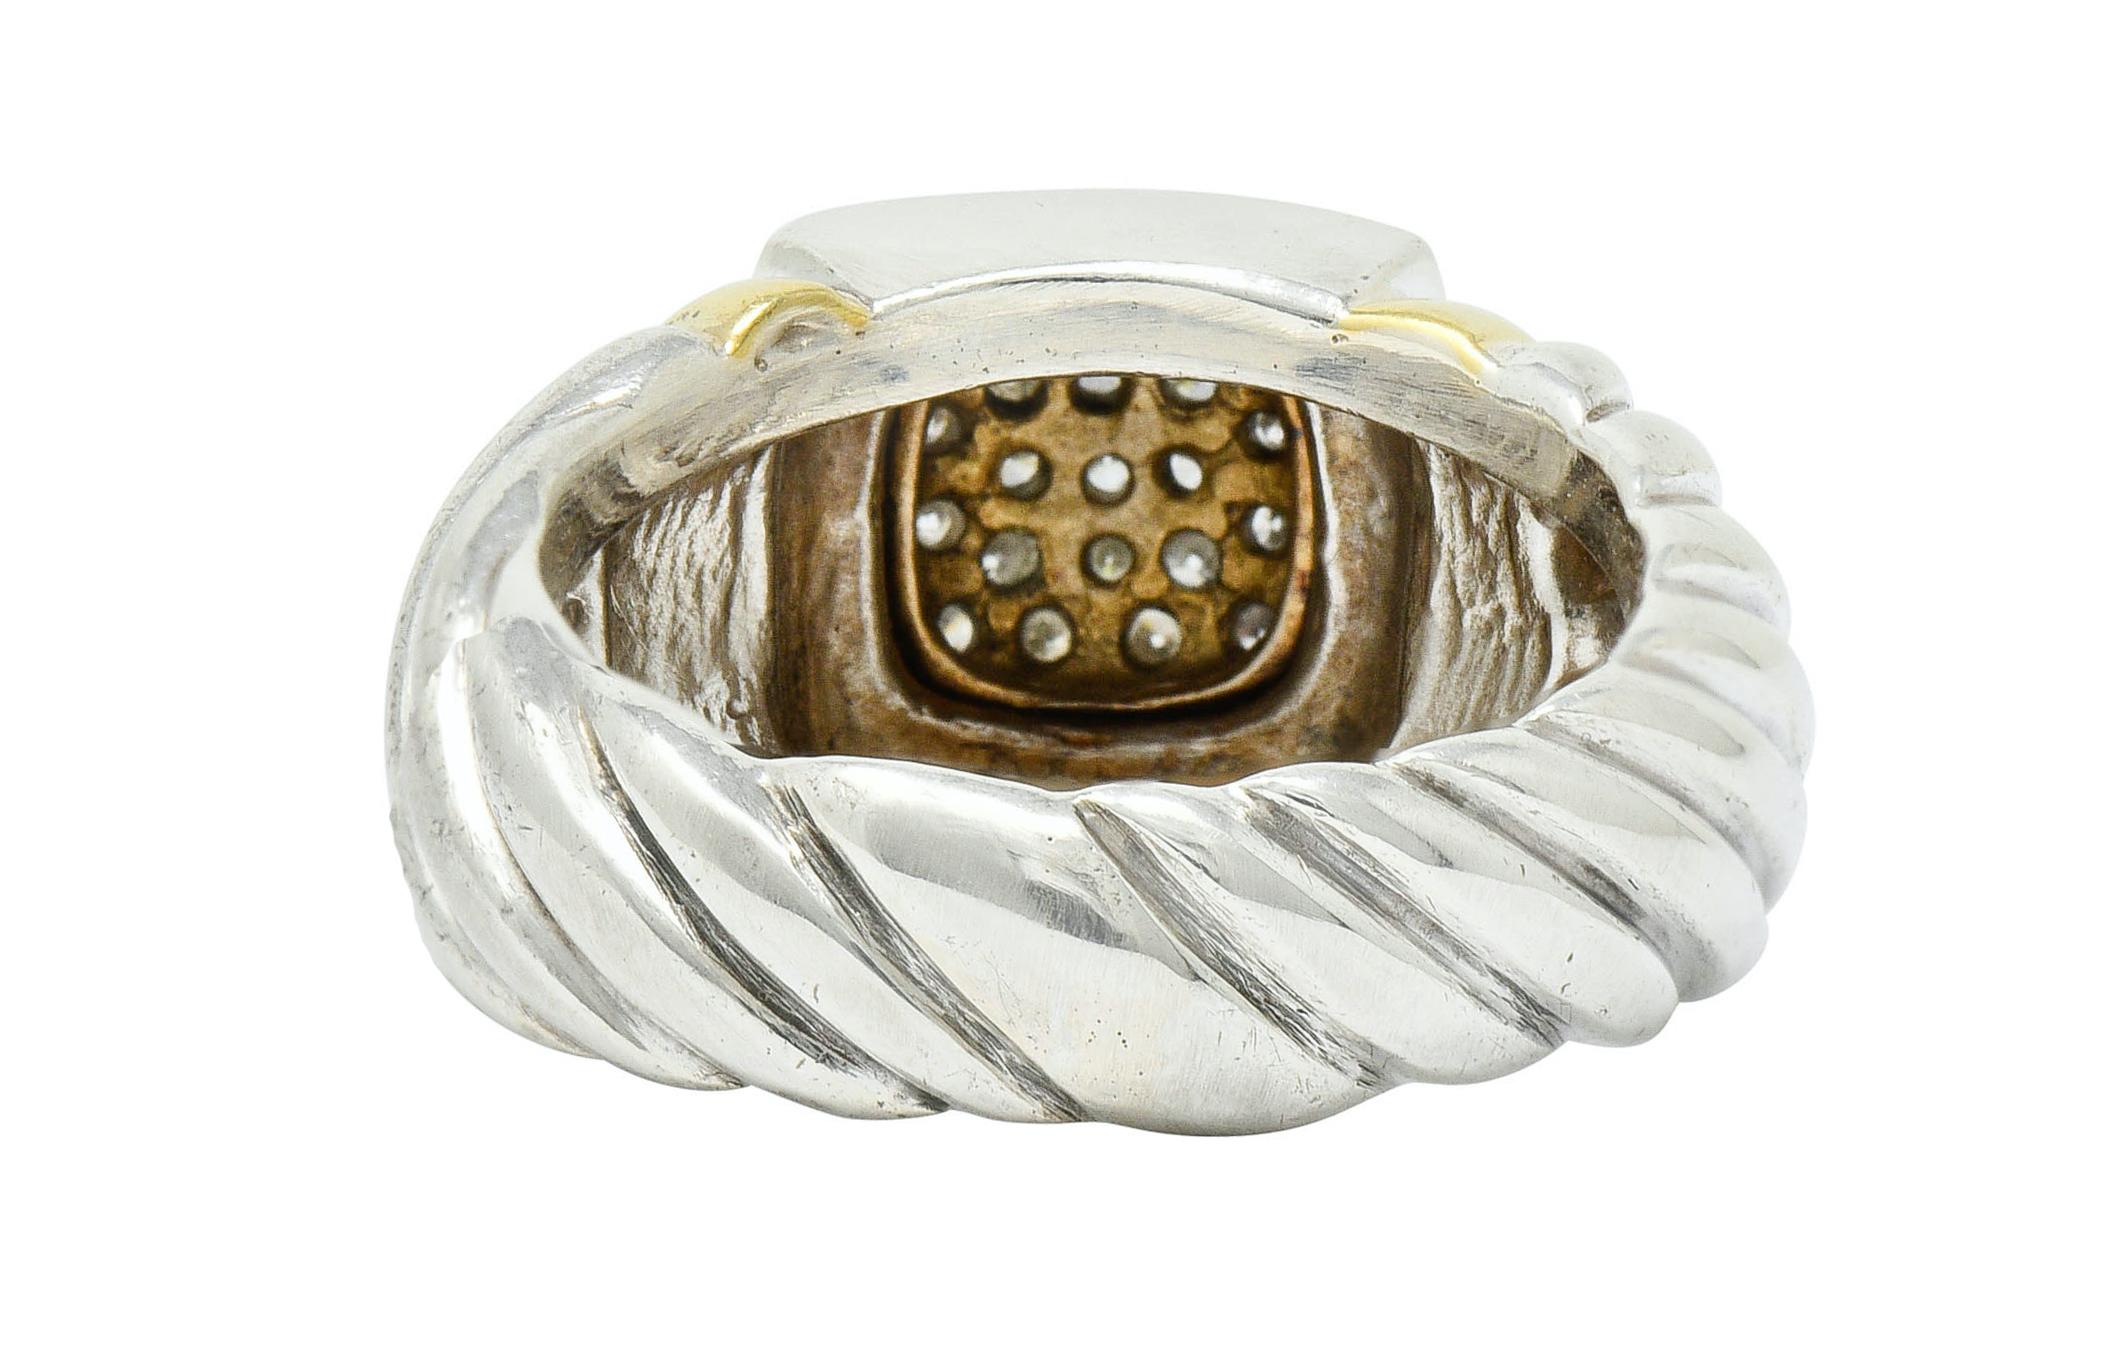 Brilliant Cut David Yurman Pave Diamond 18 Karat Gold Silver Noblesse Ring